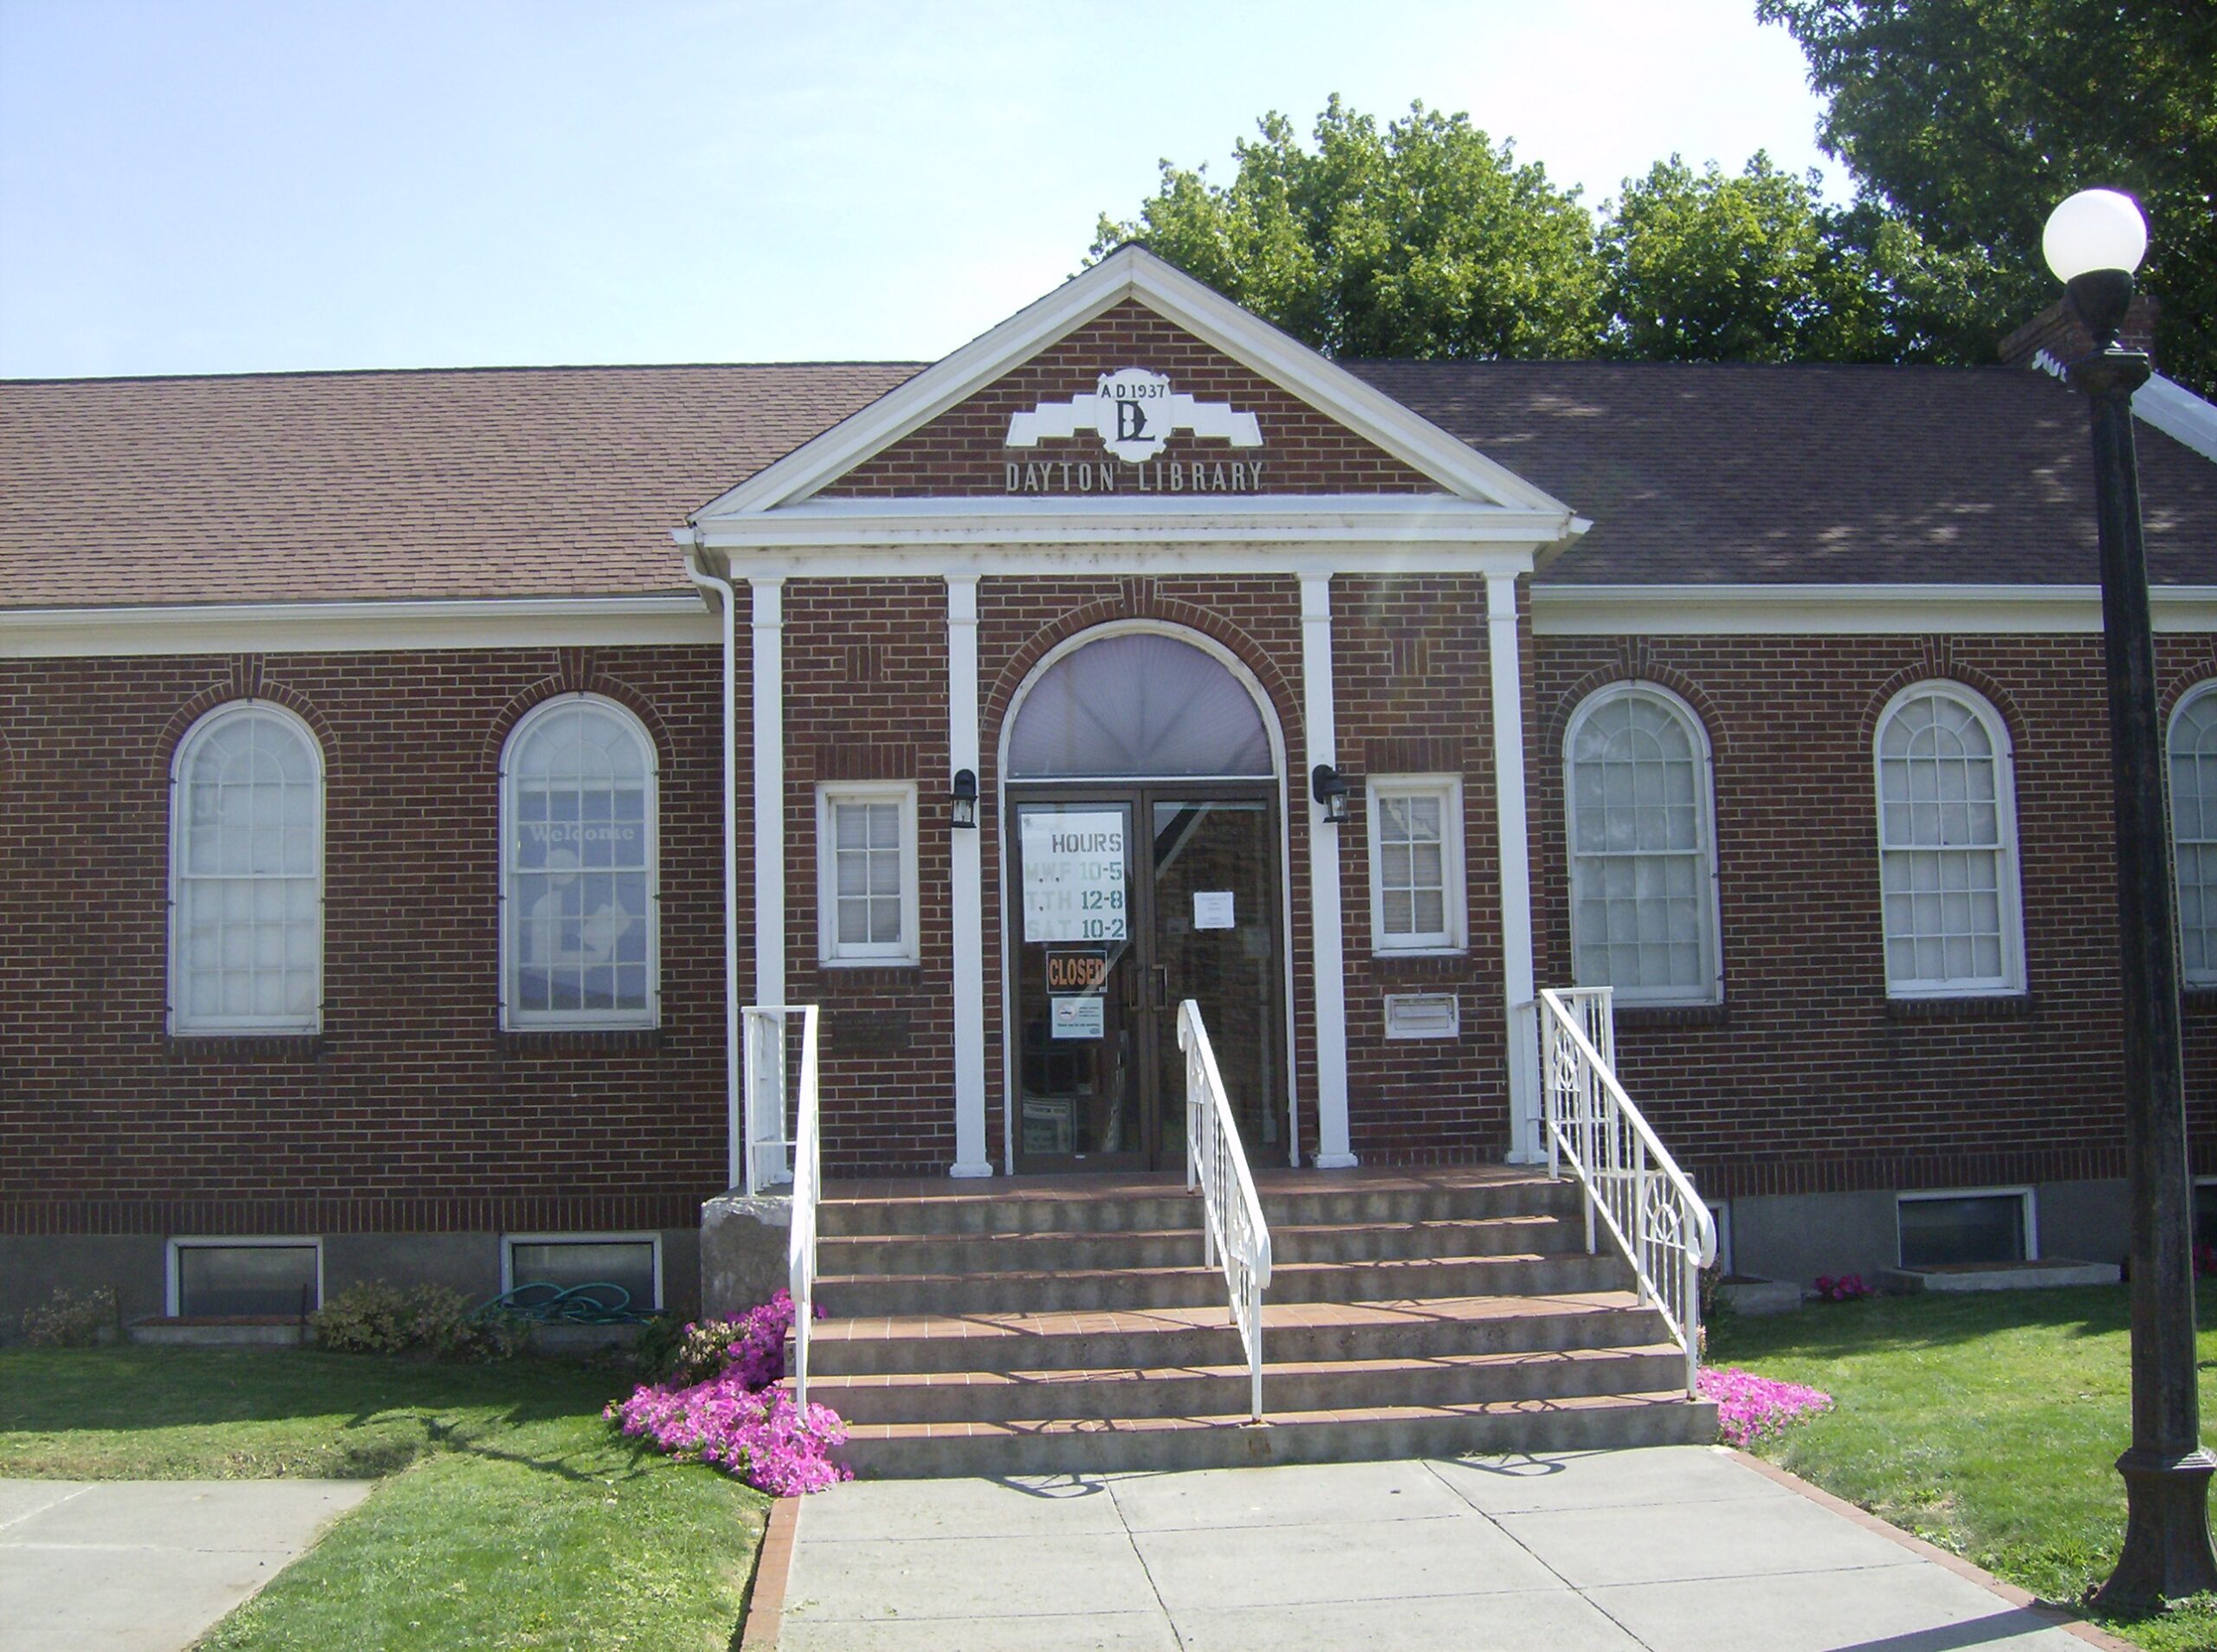 Dayton Memorial Library